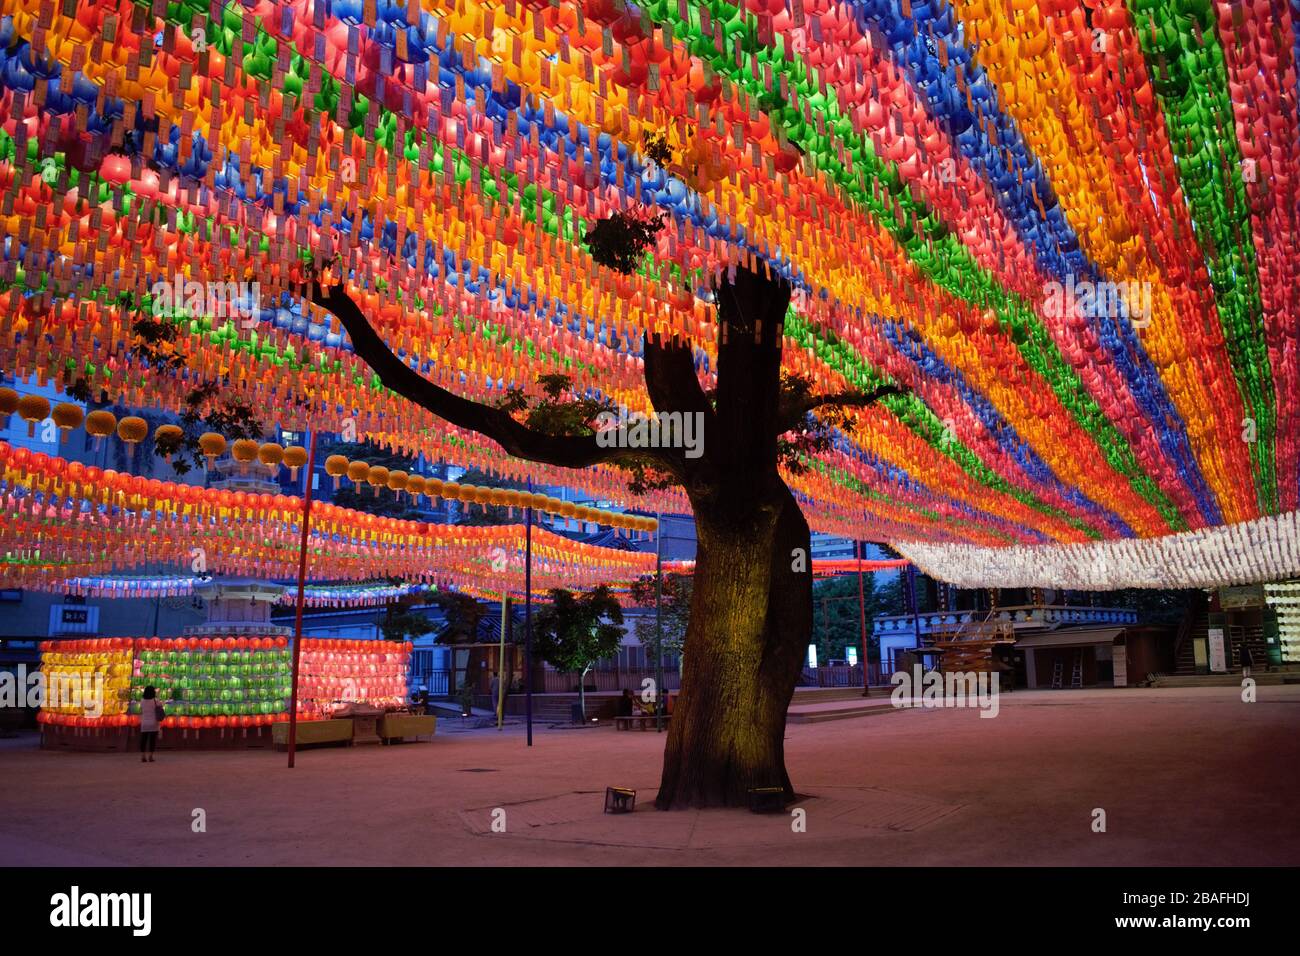 Illuminated lotus lanterns for Buddha's birthday at buddhist temple Jogyesa, Seoul, Korea Stock Photo